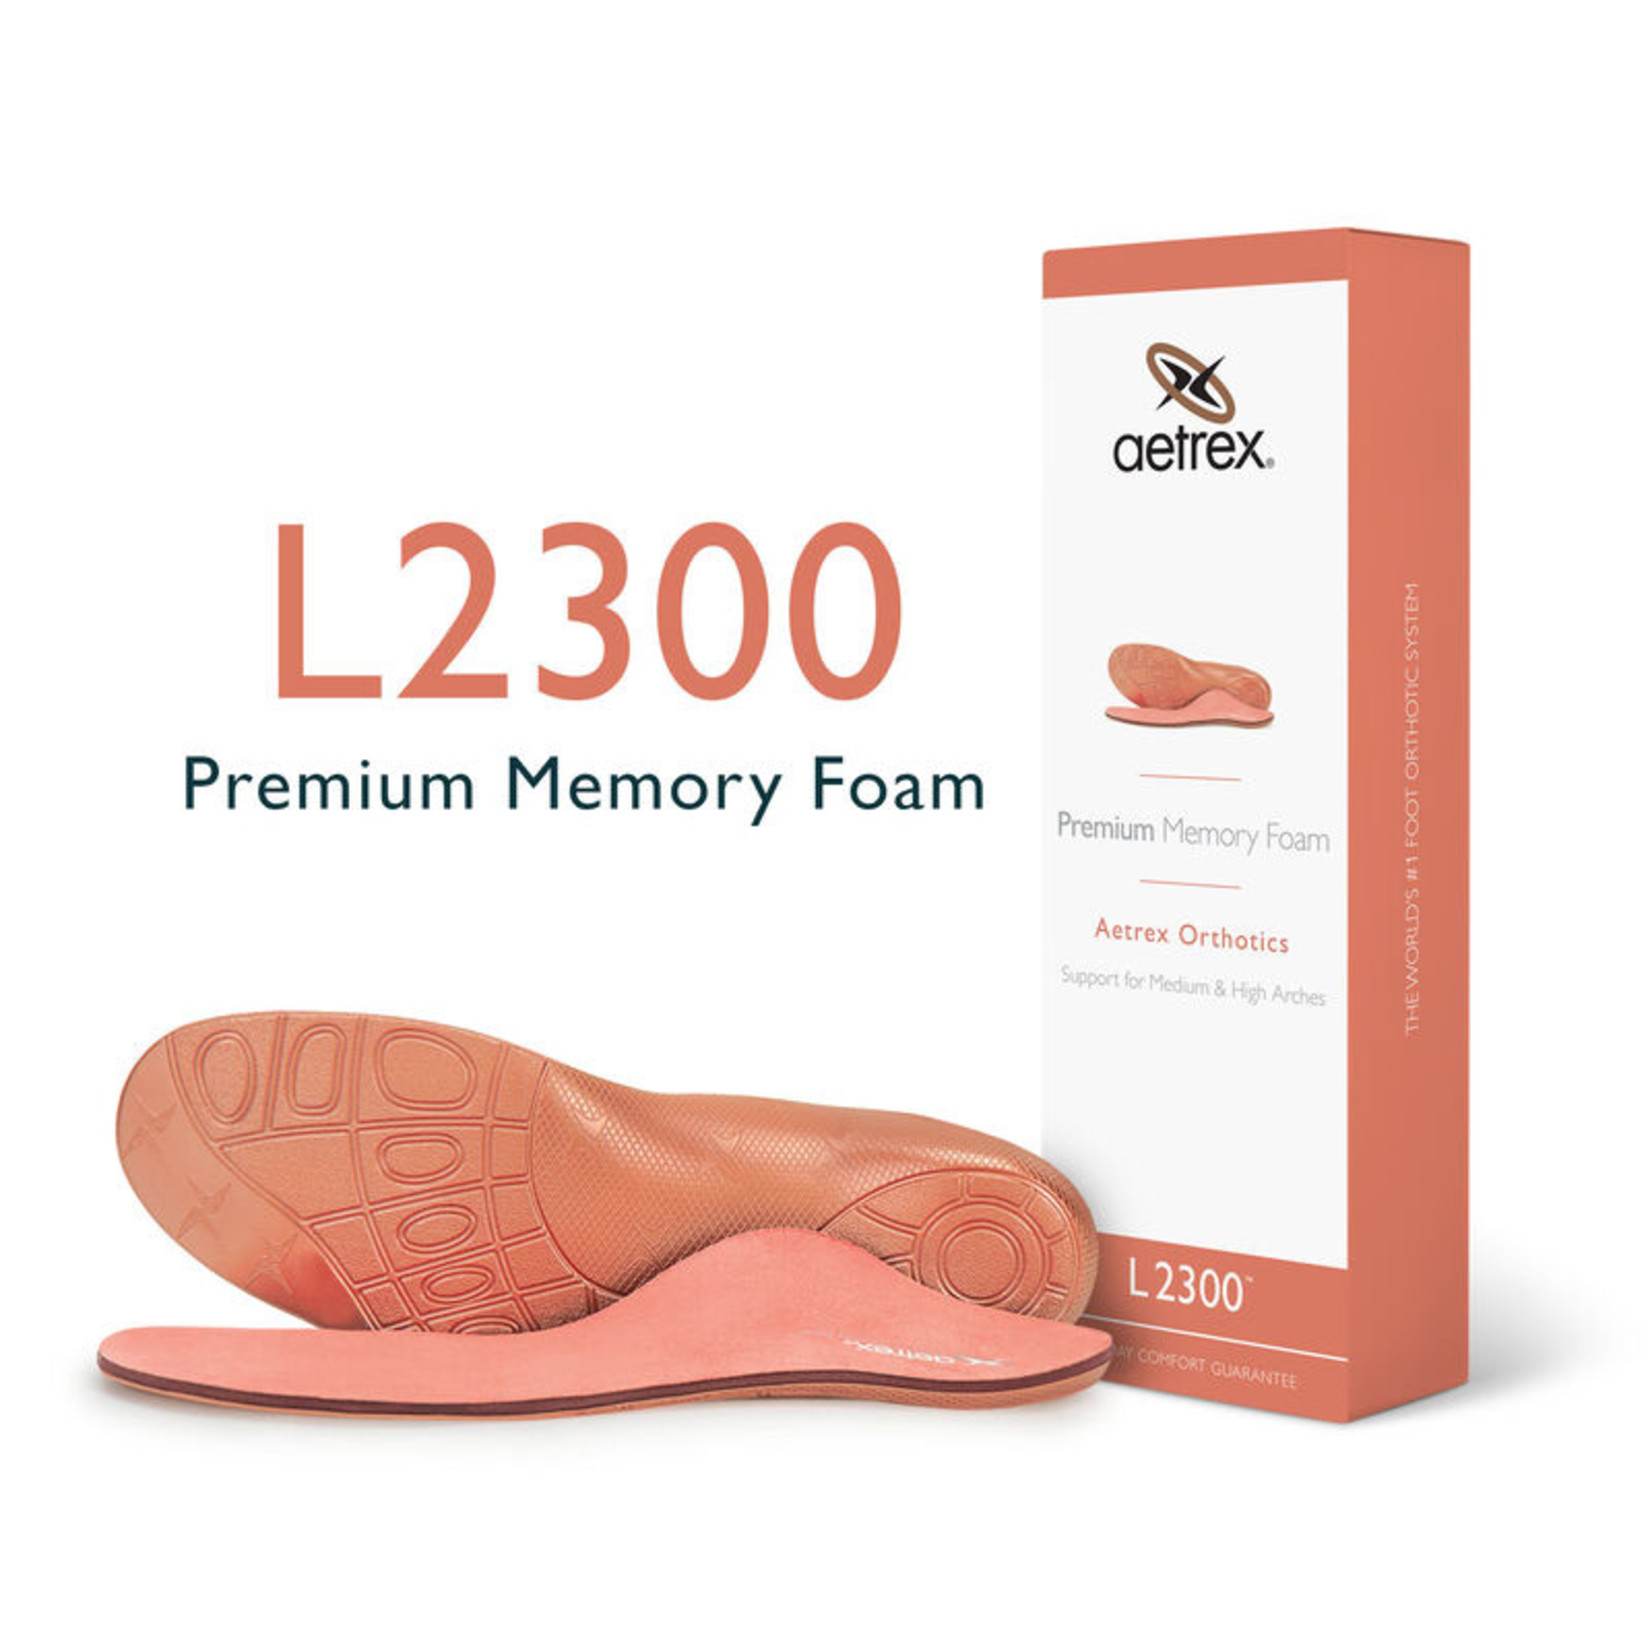 Aetrex Women's Premium Memory Foam Orthotics - Insole for Extra Comfort